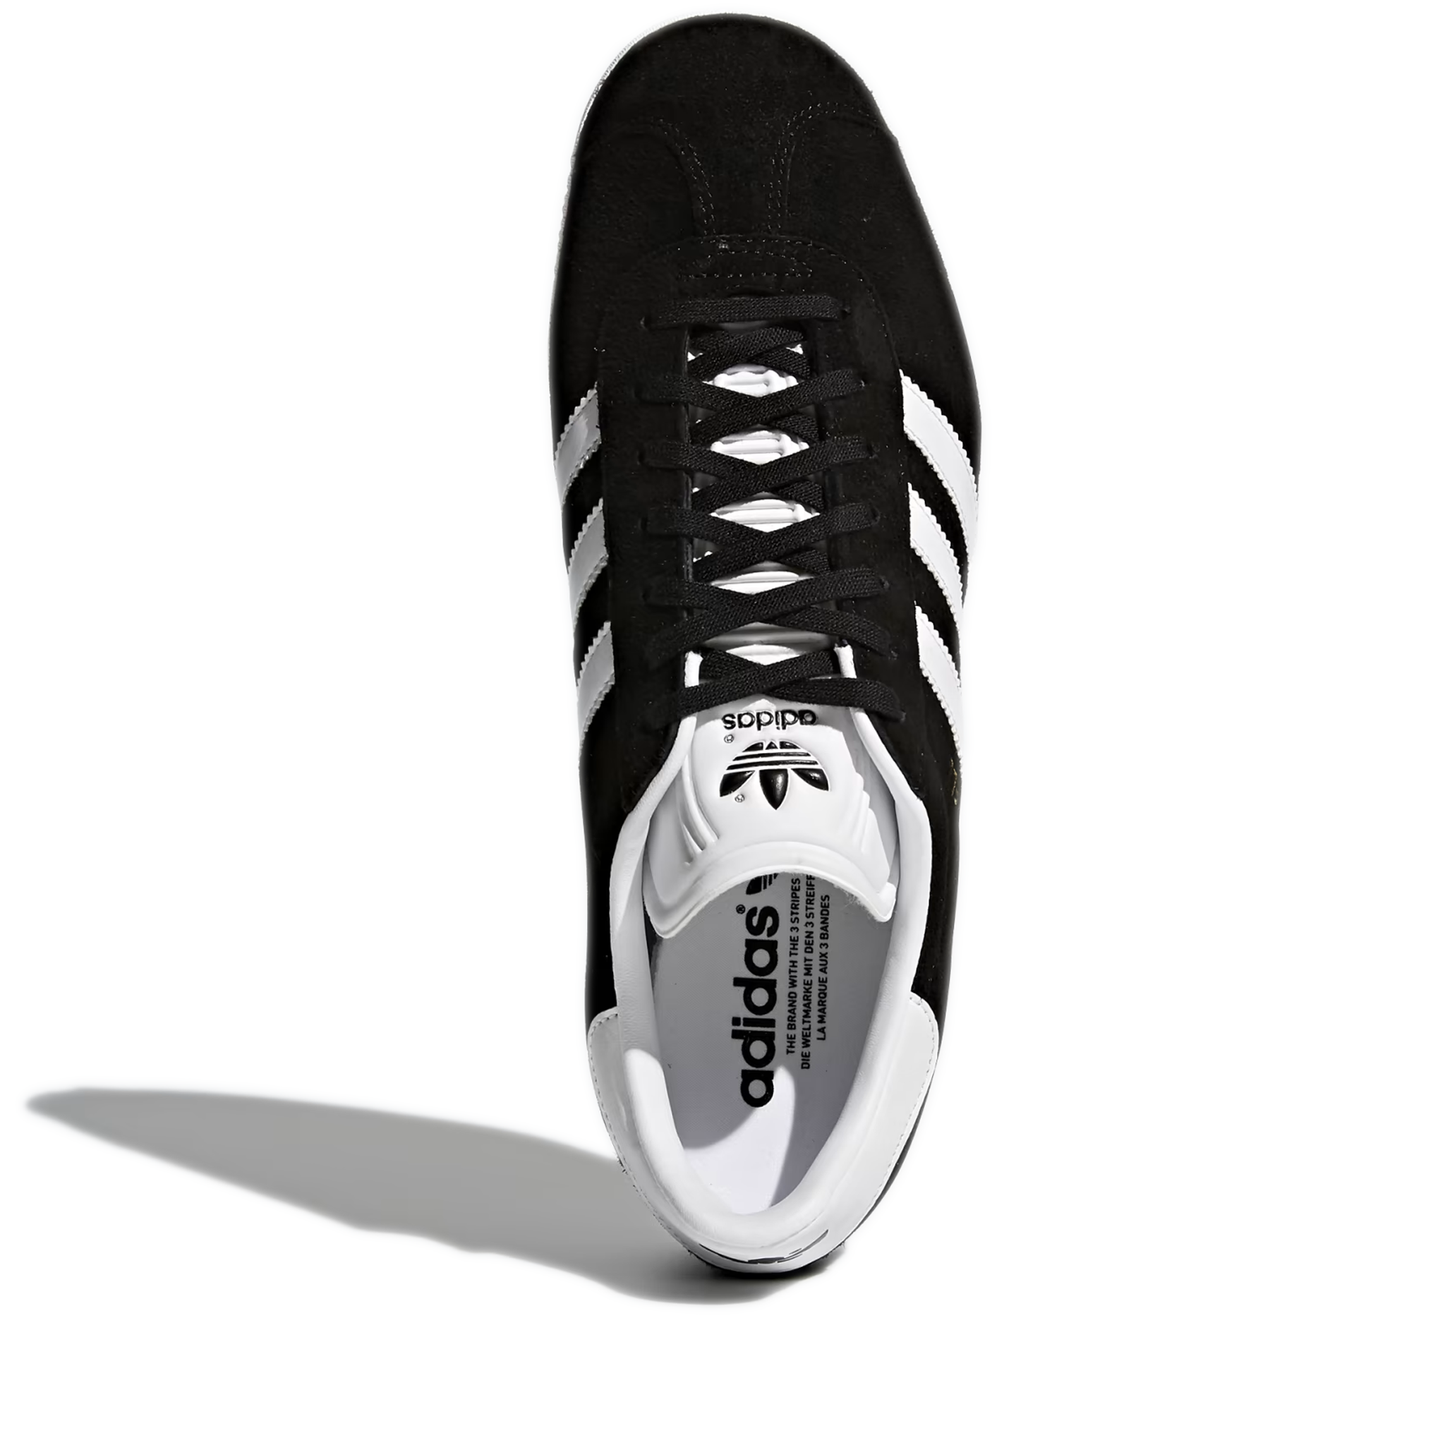 Men's Adidas Gazelle Shoes - Black/ White